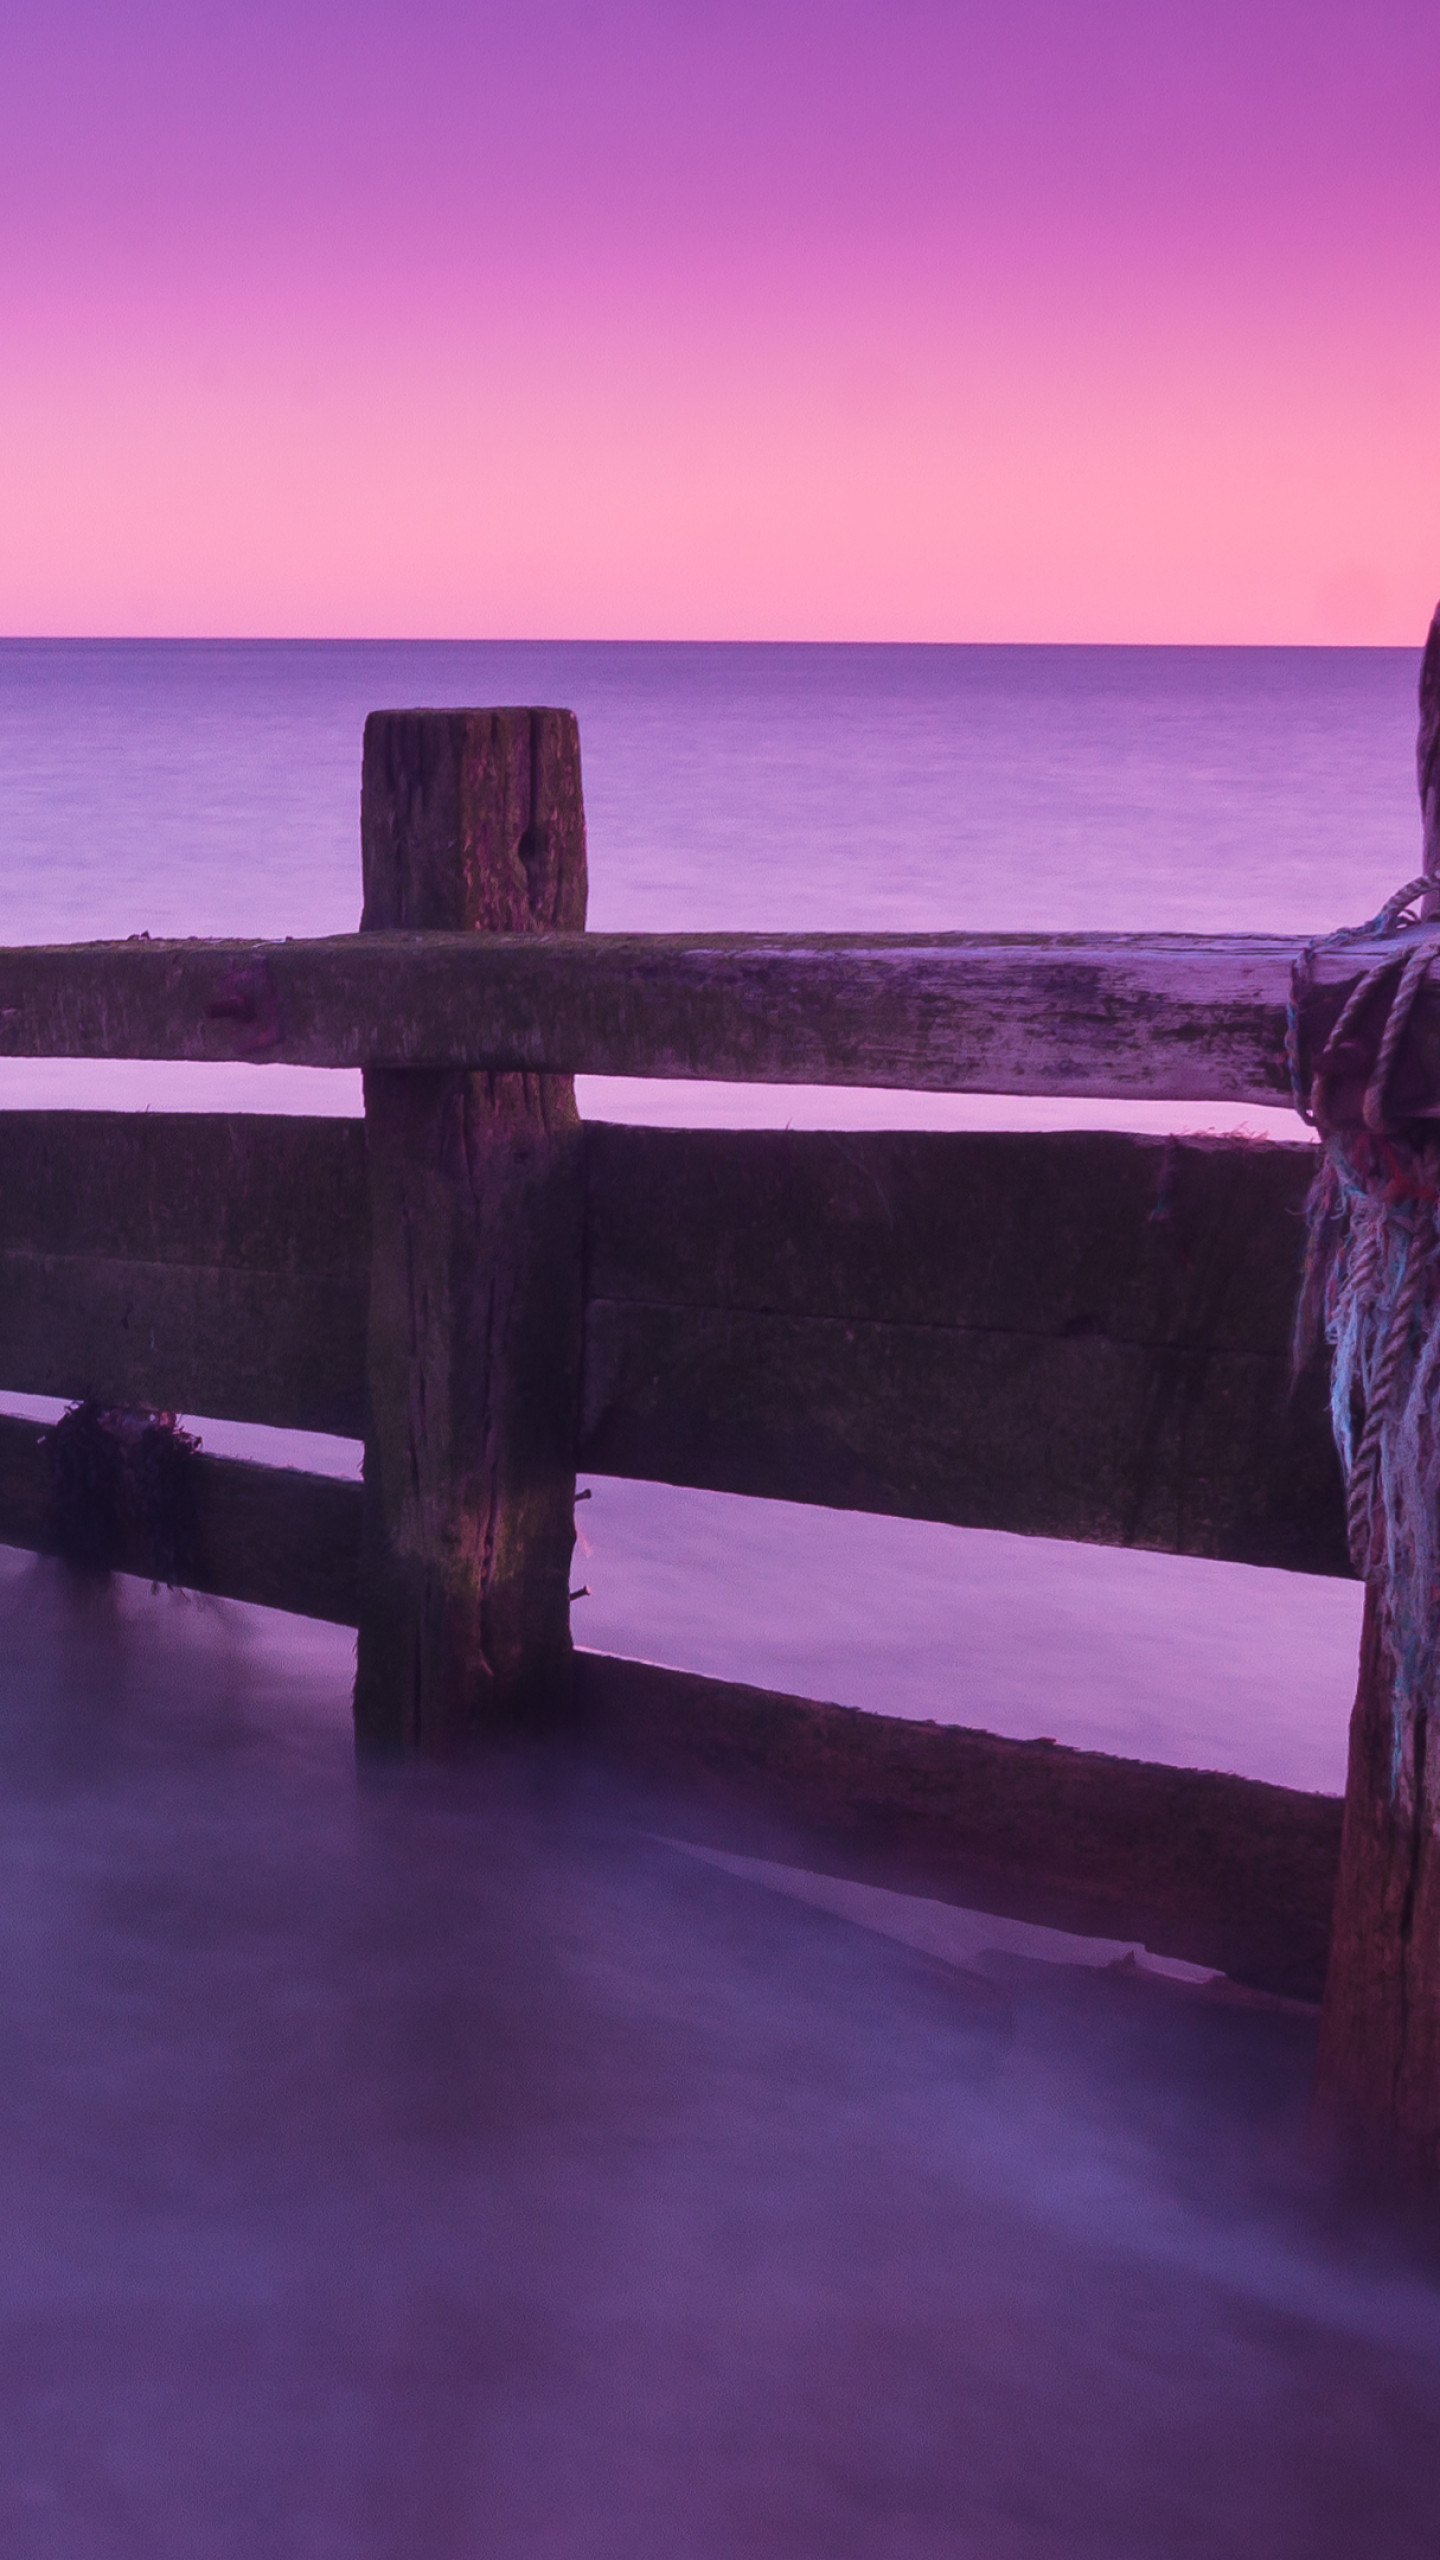 Wallpaper docks, 4k, HD wallpaper, abandoned, Seven Sisters Country Park,  England, purple, pink, sunrise, sunset, sea, ocean, water, clear sky, OS  #851